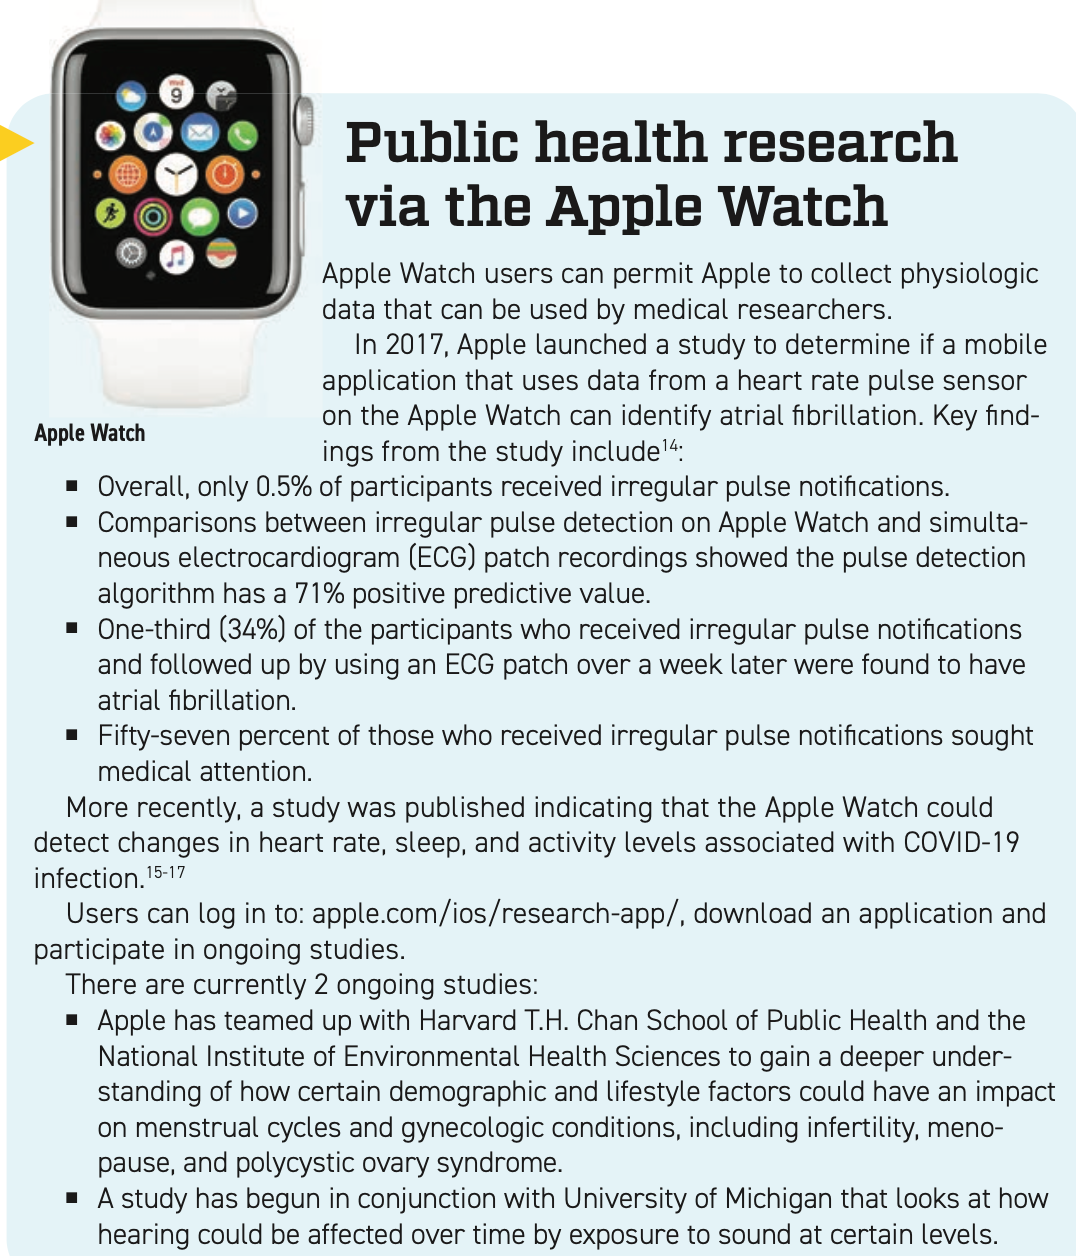 Public health research via Apple Watch